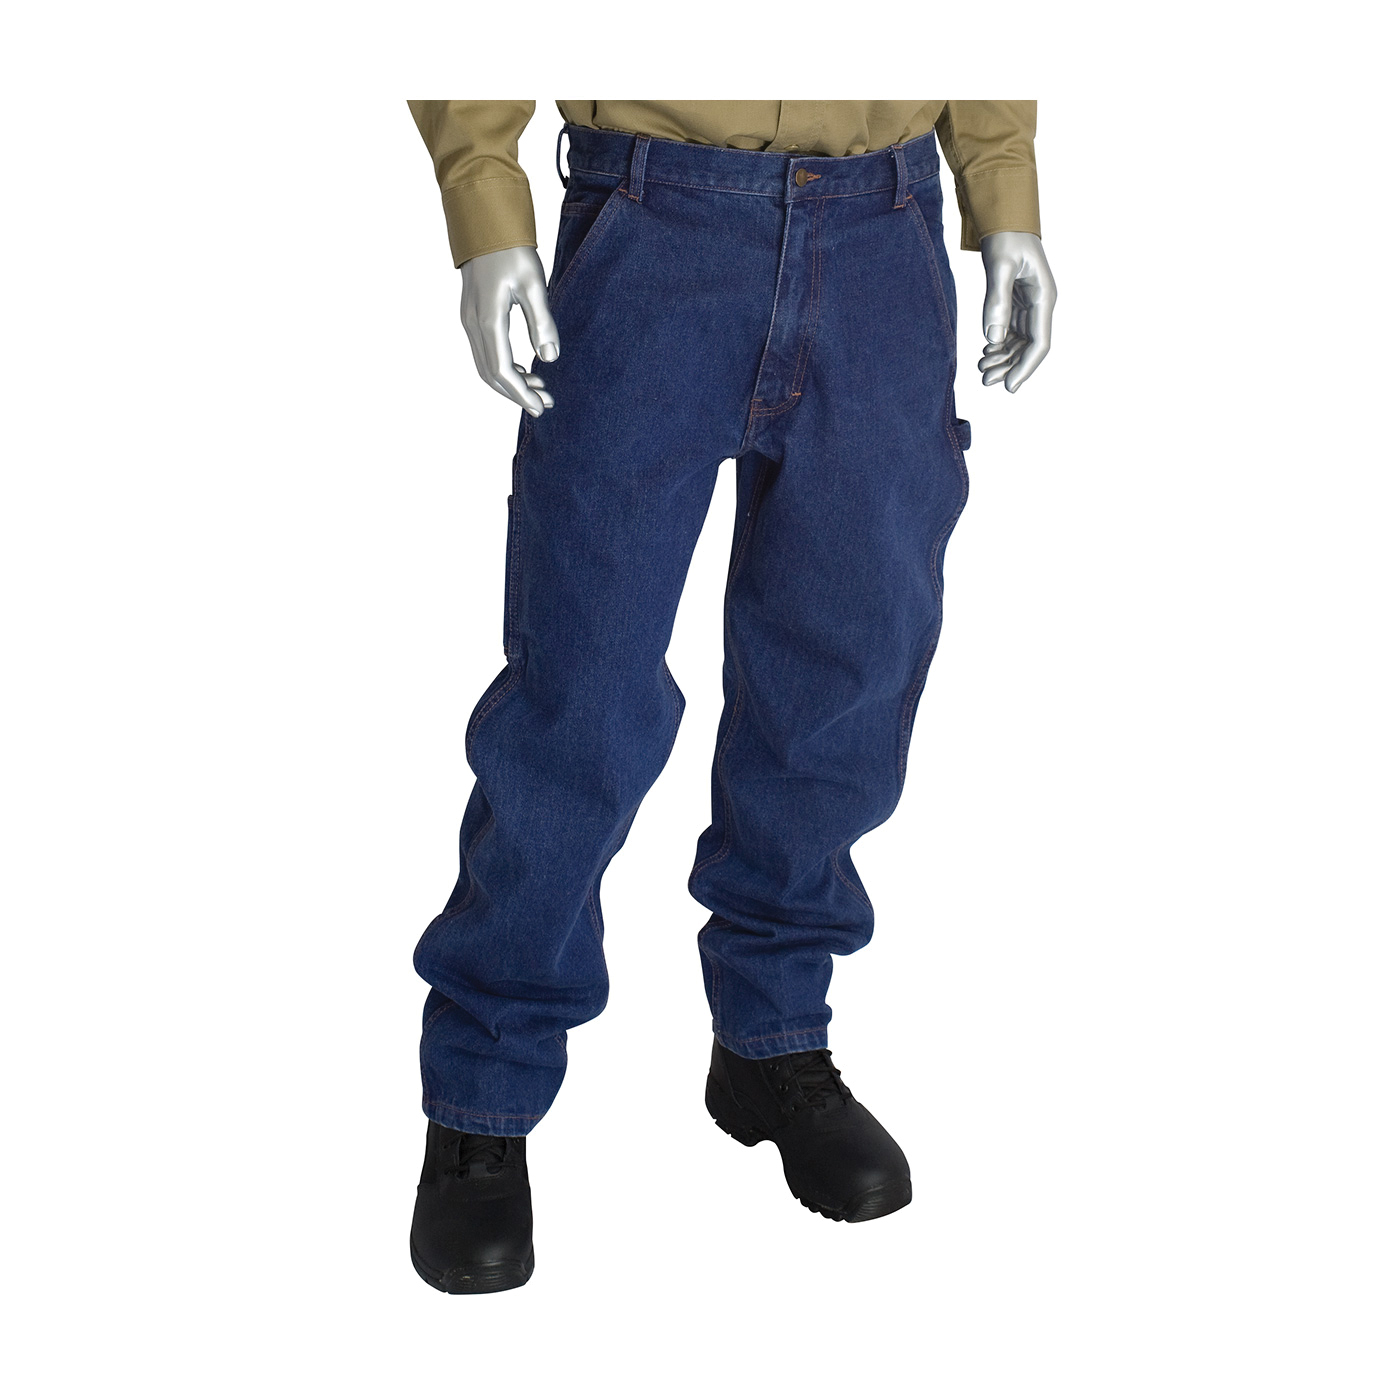 PIP® 385-FRCJ-3632 Carpenter Jeans, 36 in Waist, 32 in L Inseam, Blue Denim, Cotton